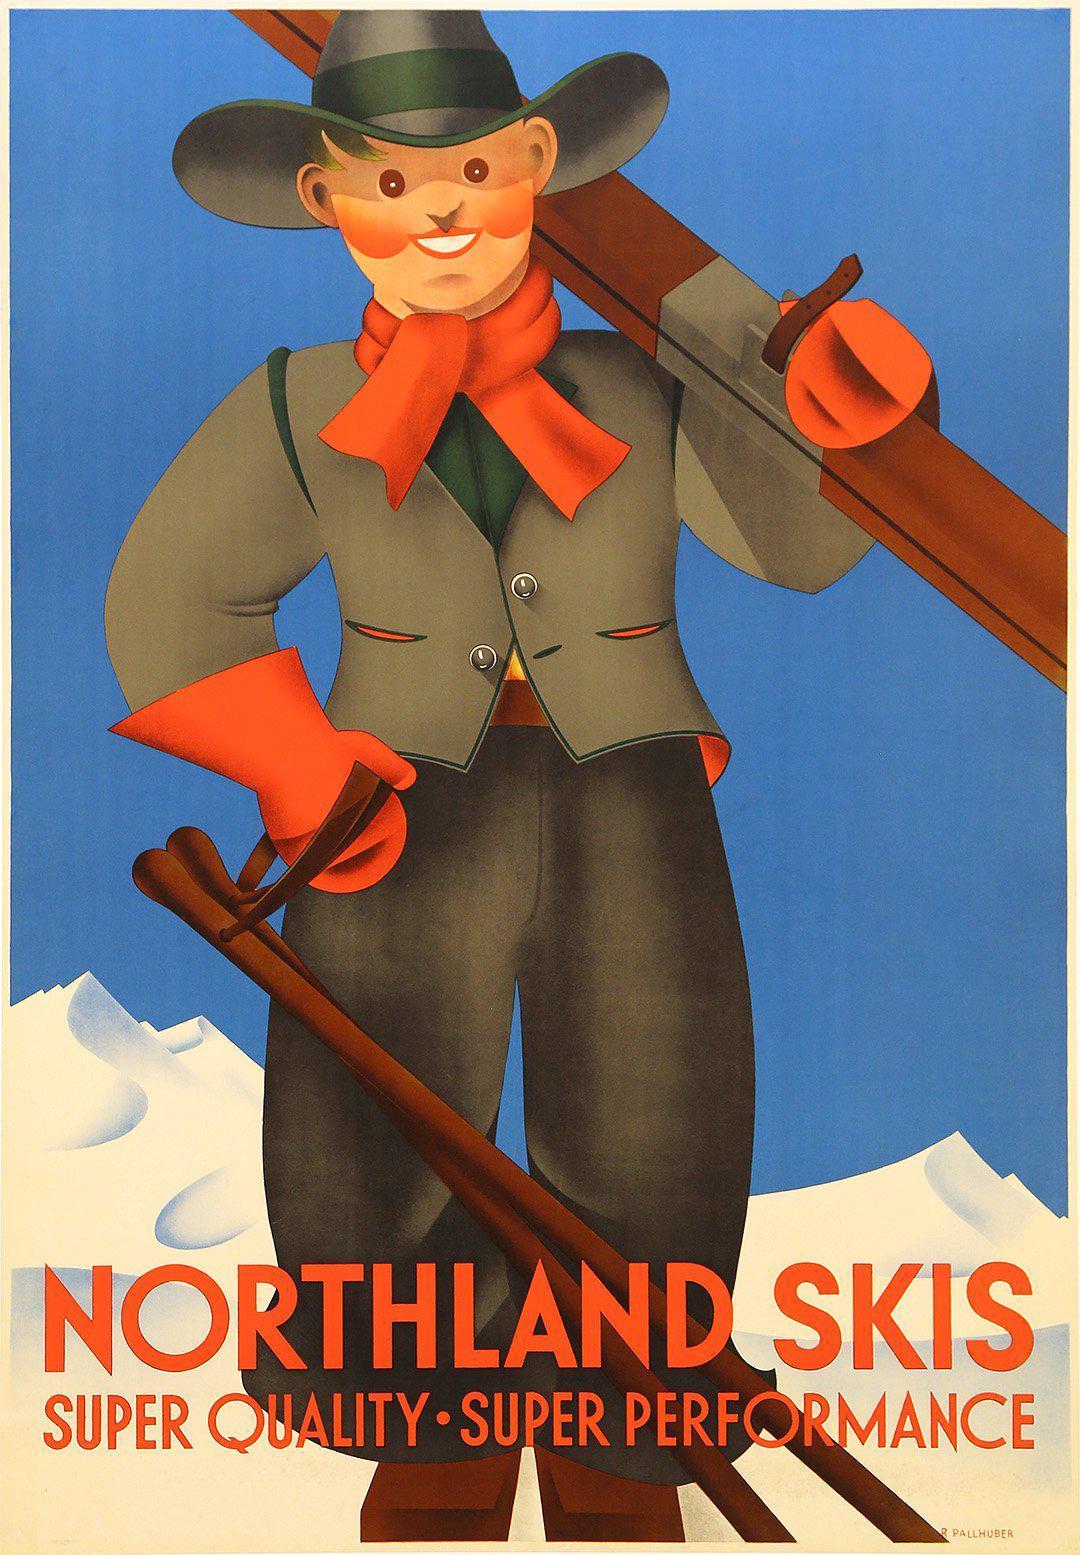 Original Northland Skis Poster c1935 by Pallhuber Skiing